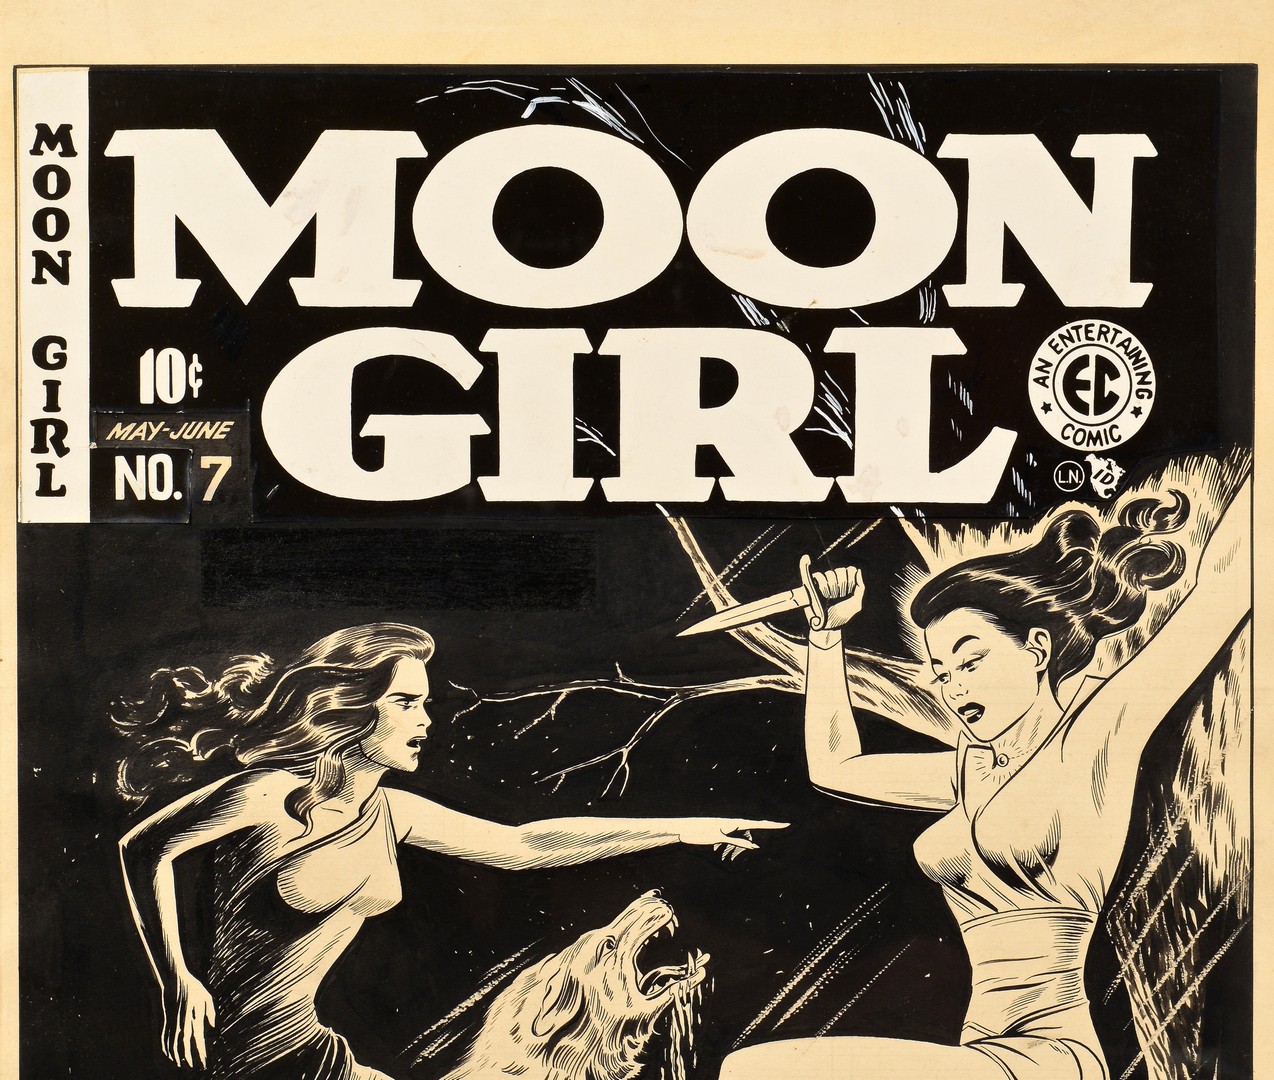 Lot 439: Sheldon Moldoff Moon Girl #7 Cover Art